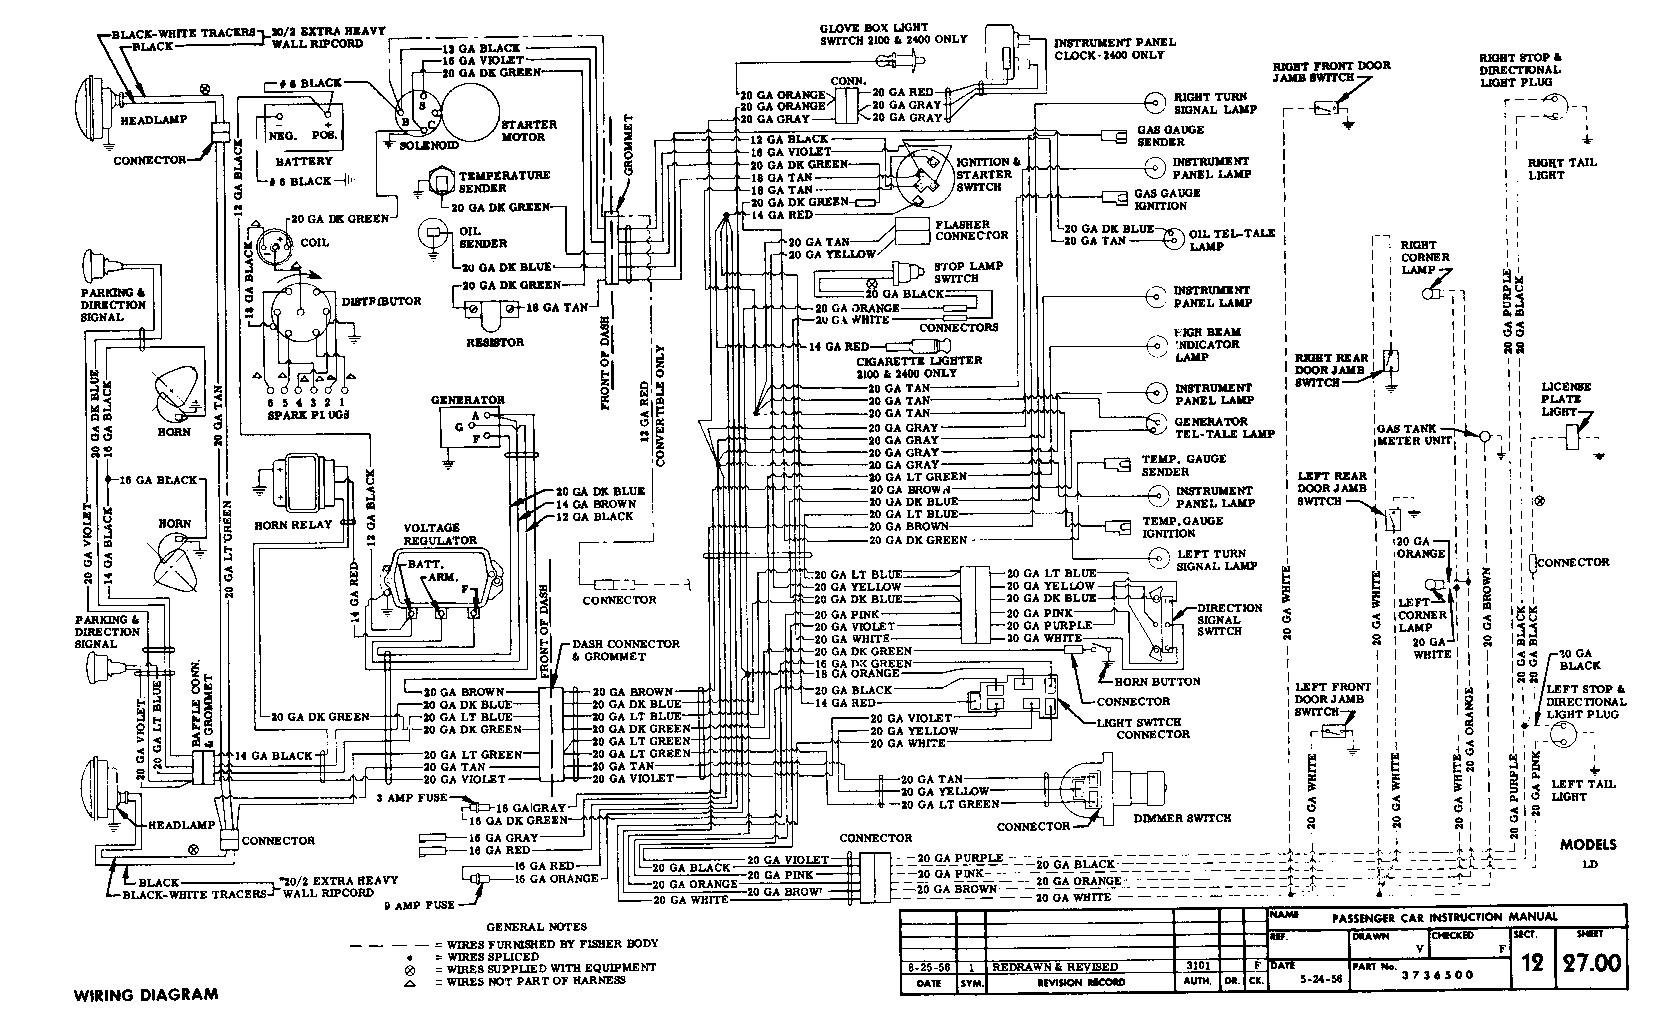 1957 chevrolet wiring diagram